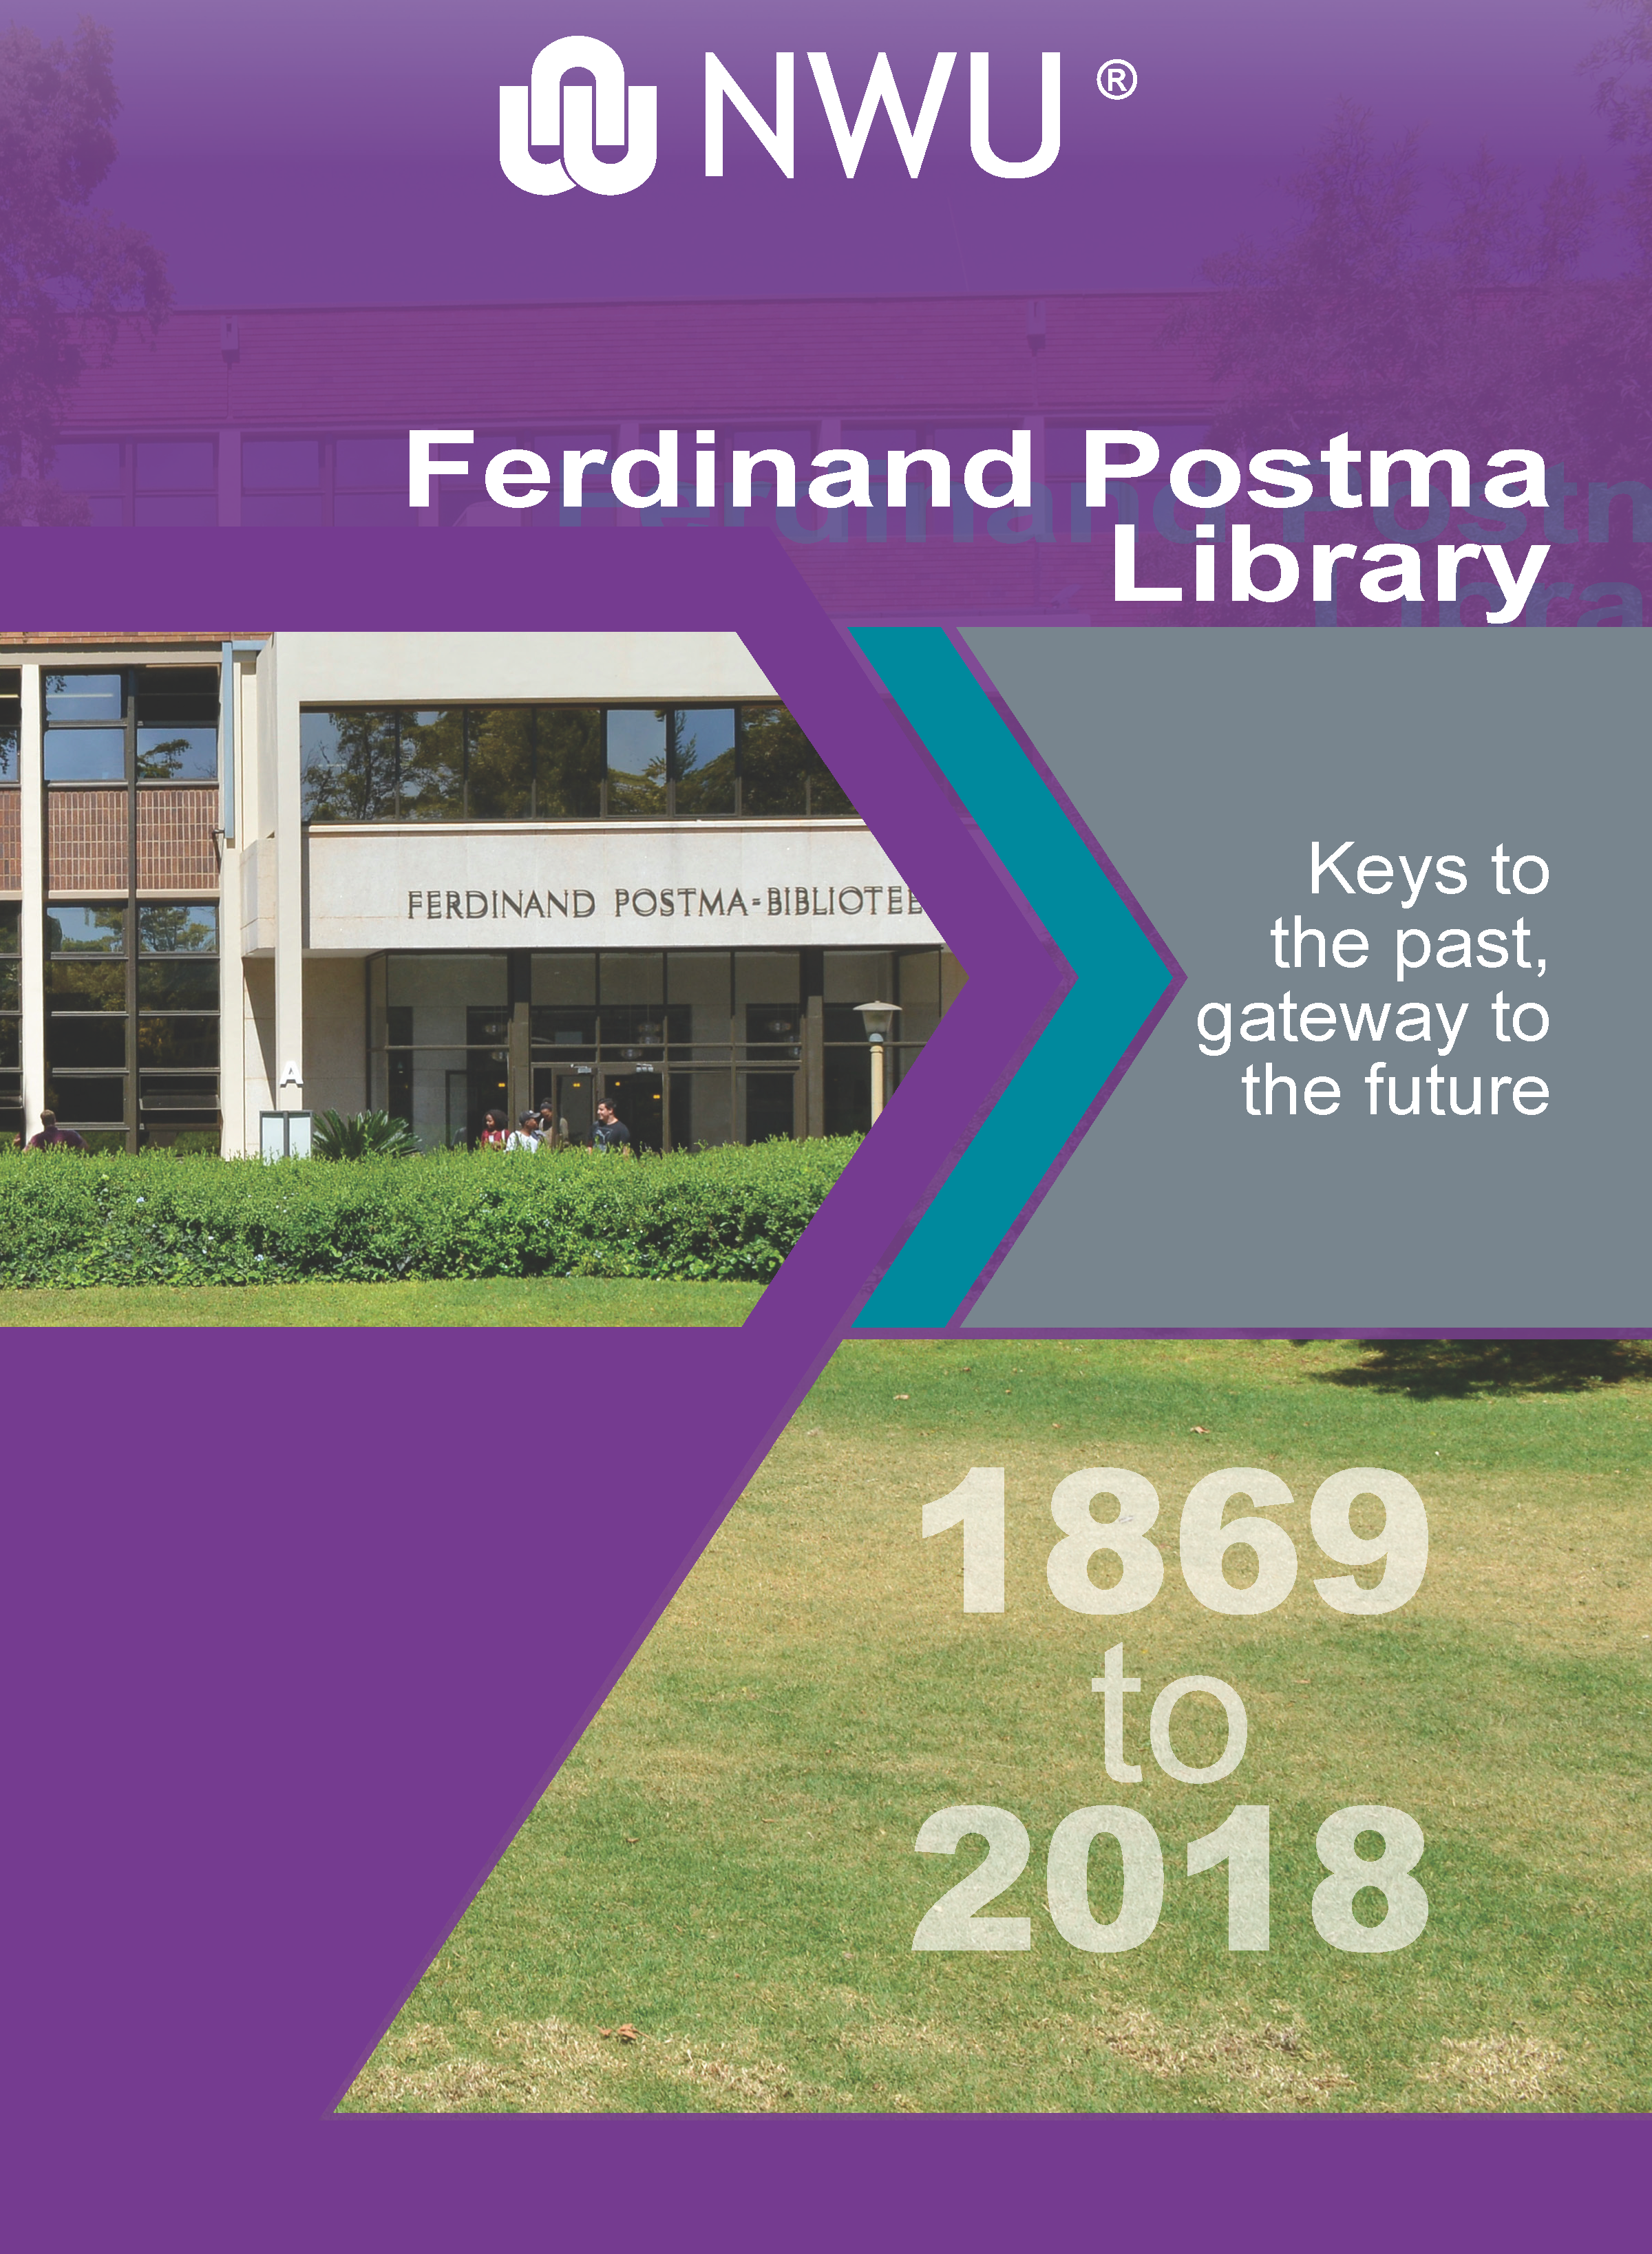 Ferdinand Postma Library History